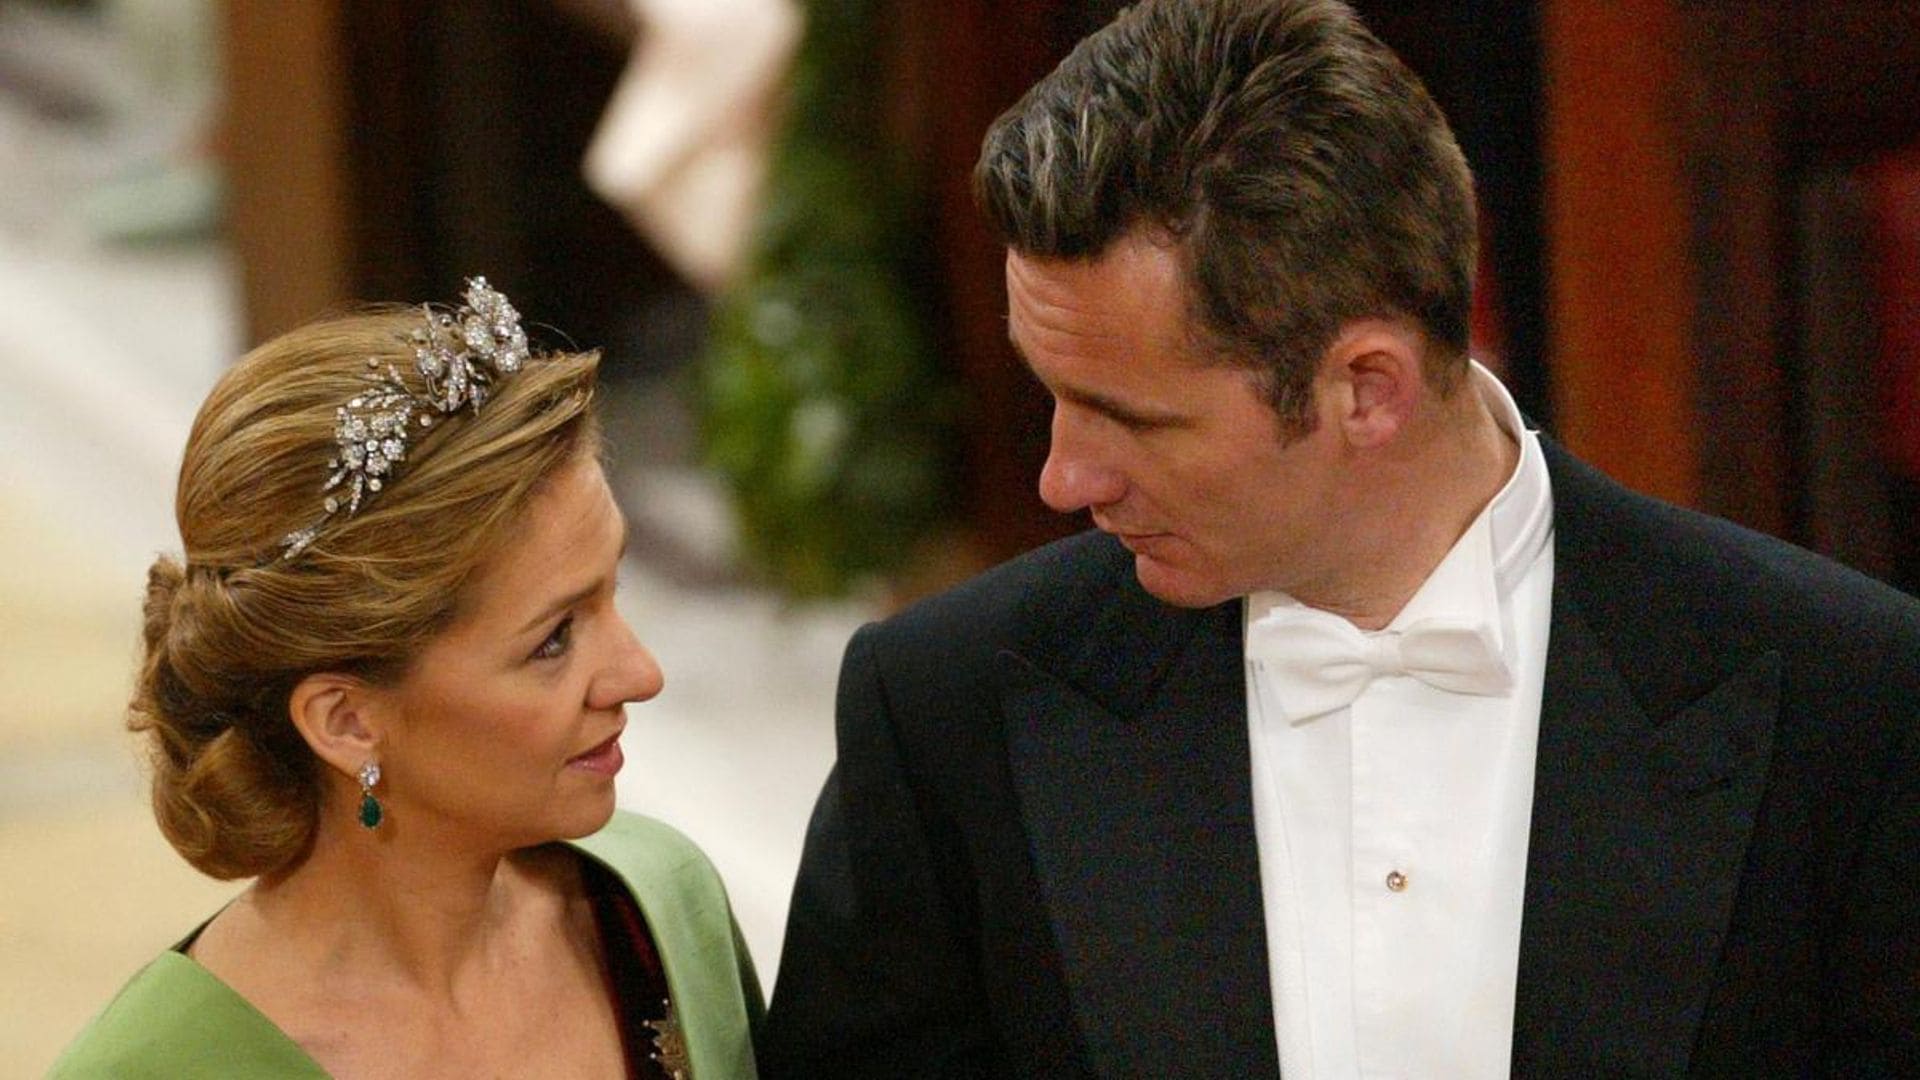 King Felipe's sister Infanta Cristina finalizes her divorce